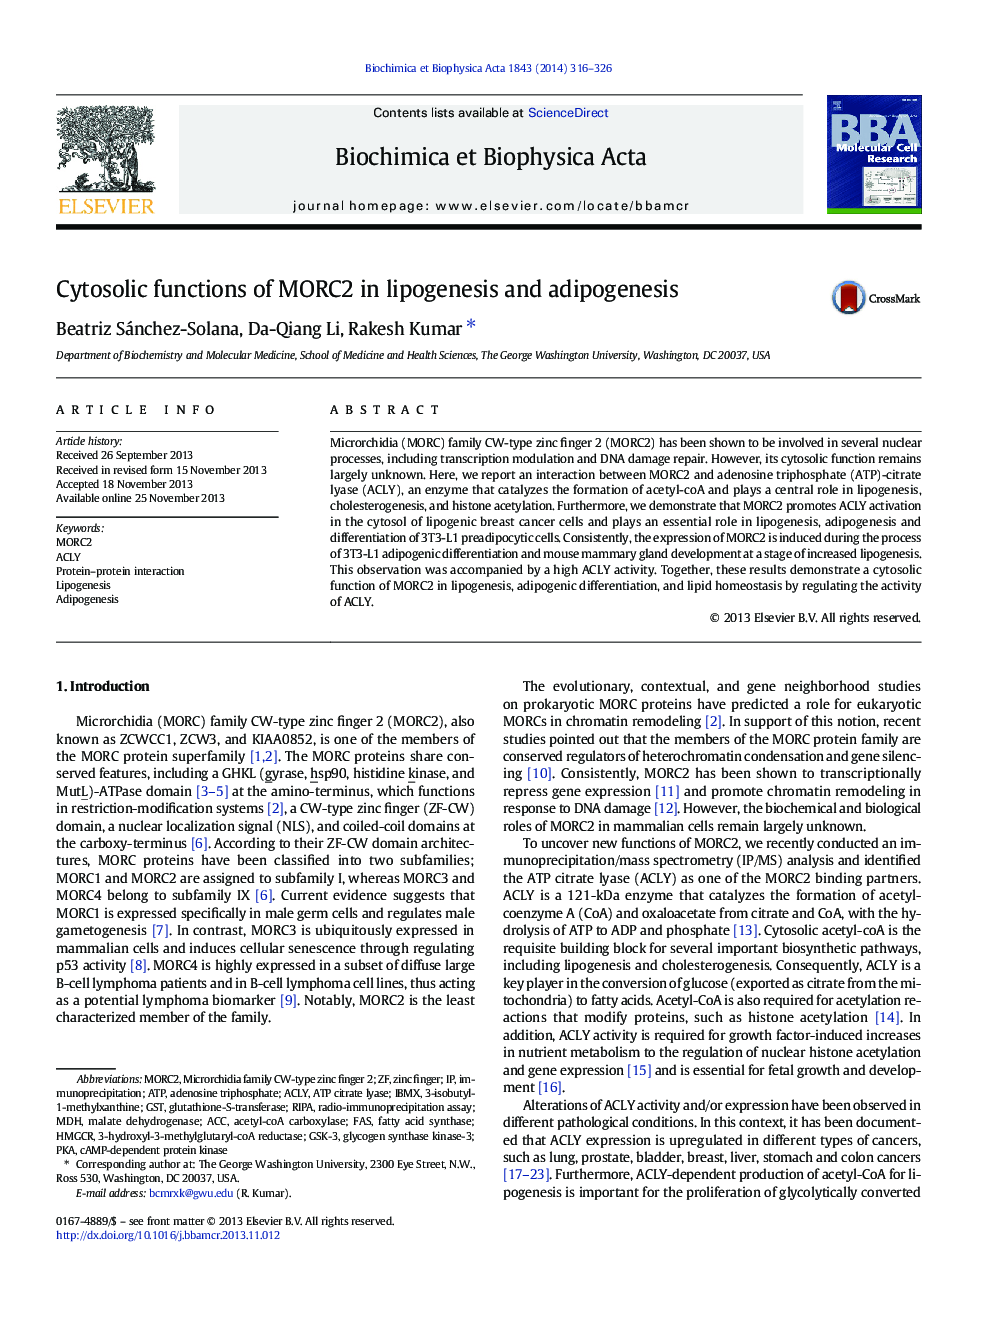 Cytosolic functions of MORC2 in lipogenesis and adipogenesis